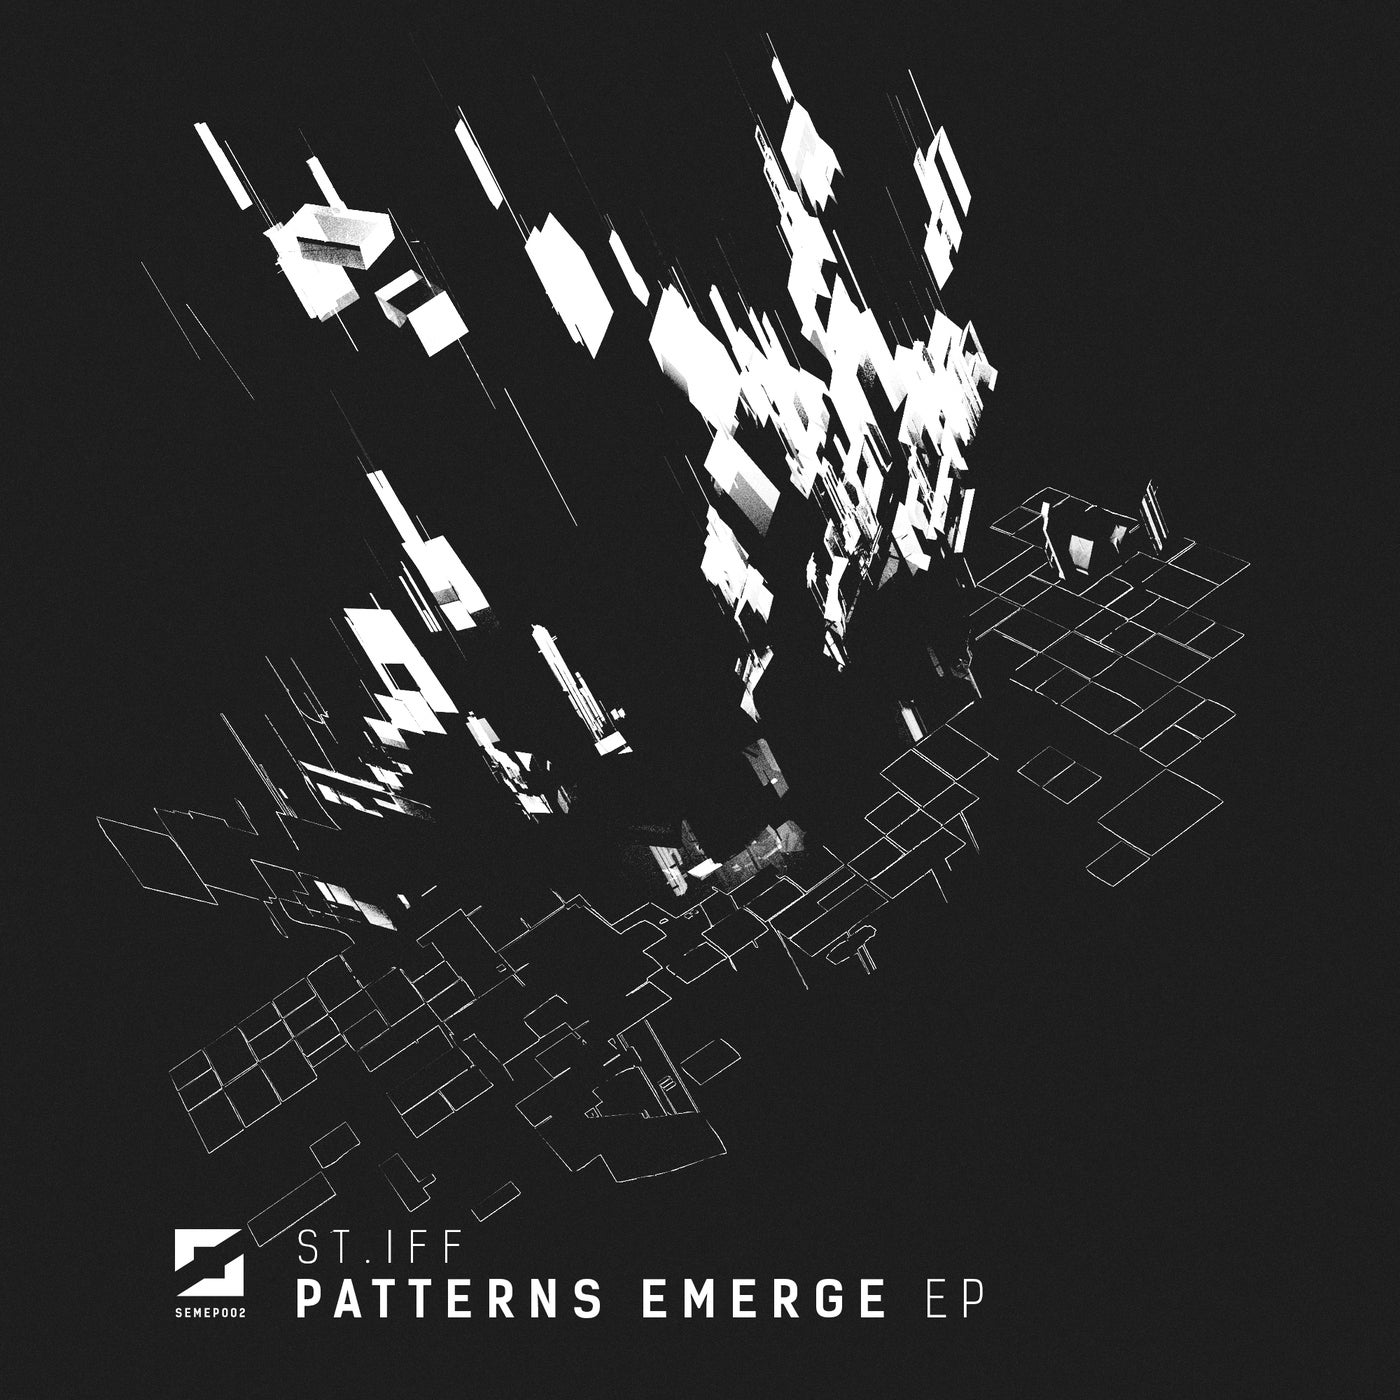 Patterns Emerge EP